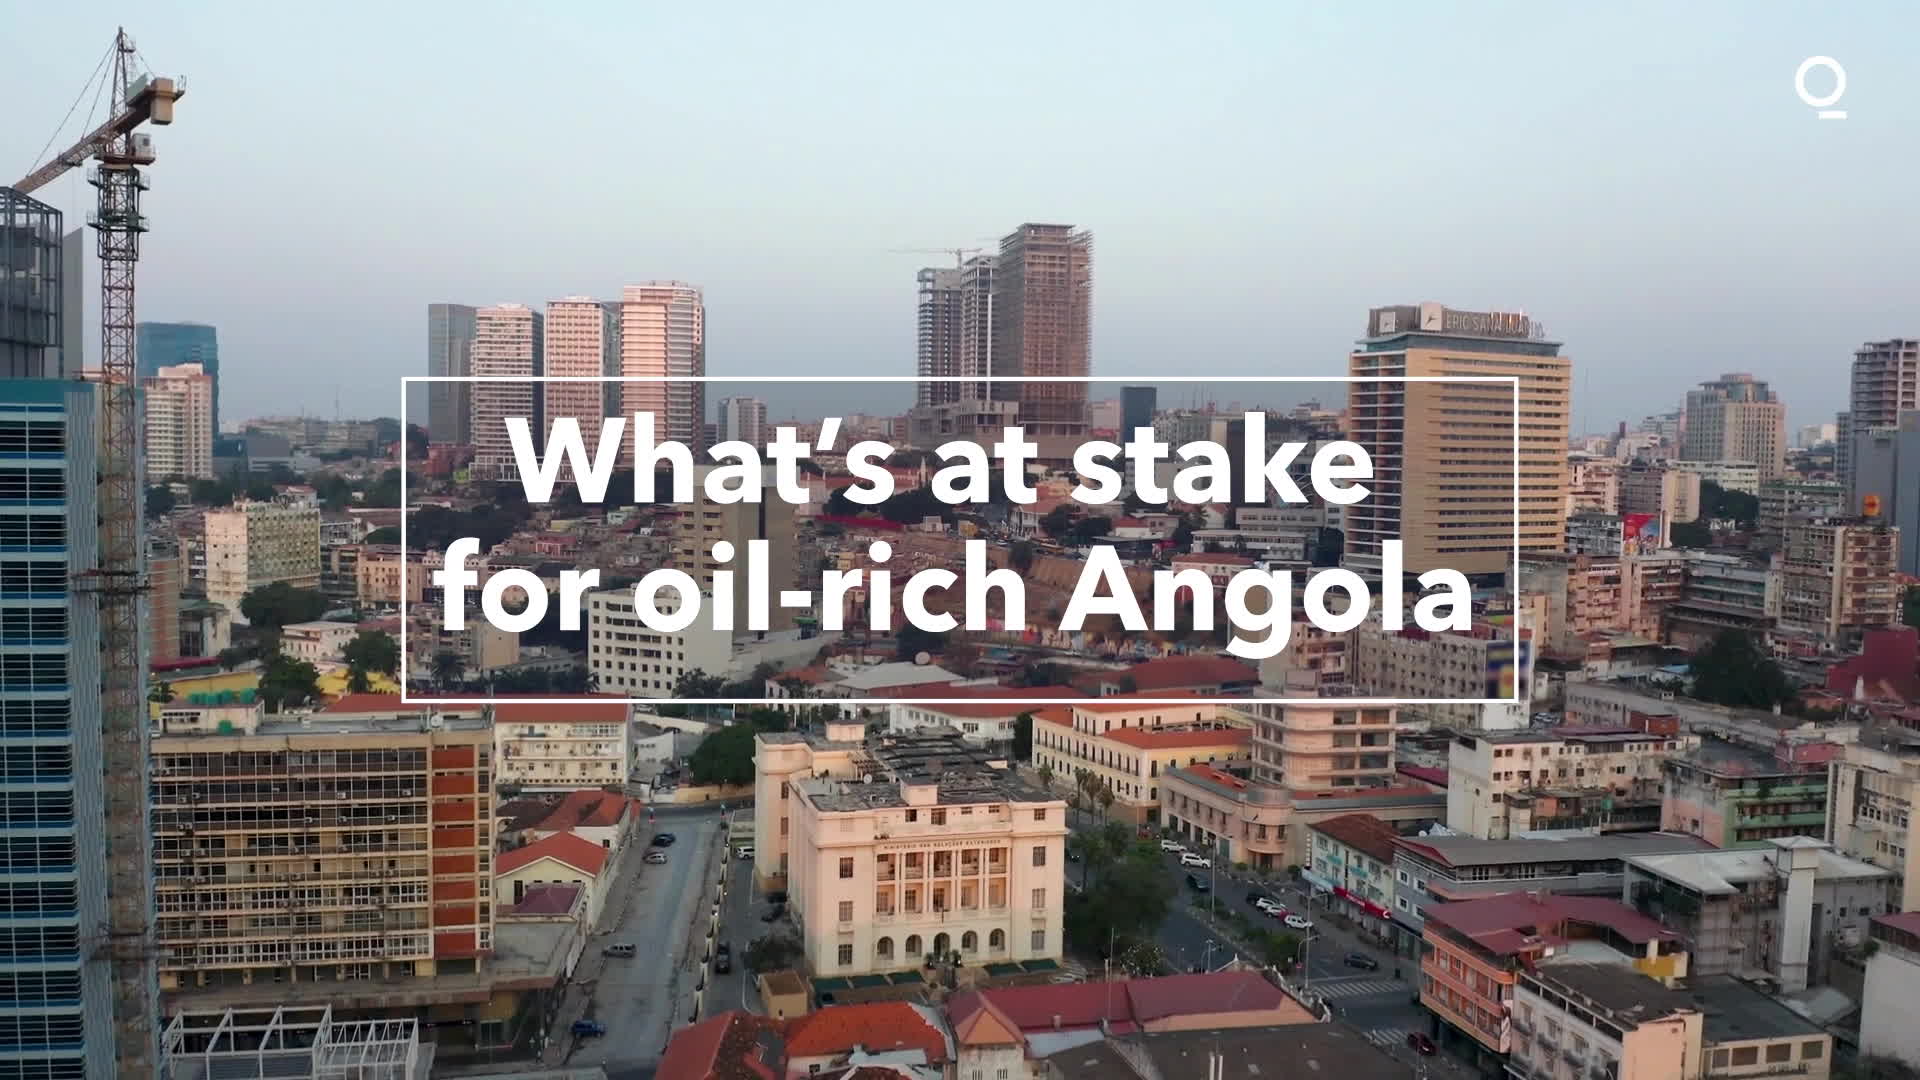 Serena plak werkgelegenheid The Key Economic Hurdles Awaiting Angola's New President: Charts - Bloomberg